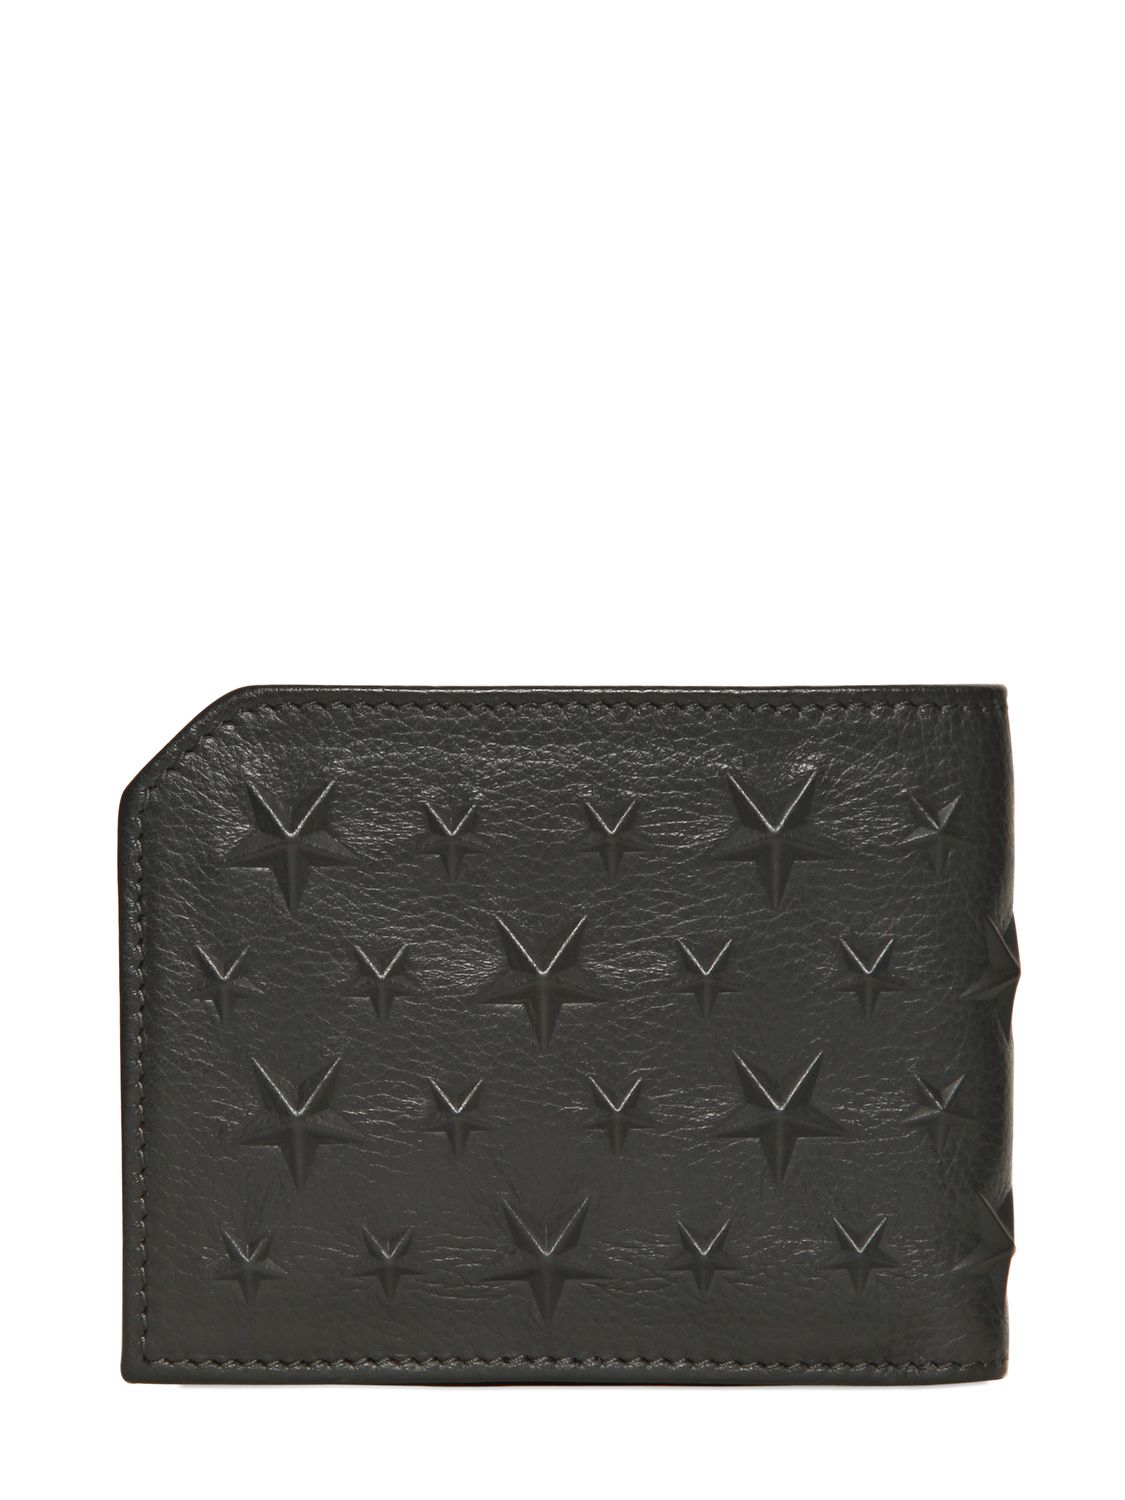 Jimmy choo Star Embossed Leather Wallet in Black for Men | Lyst